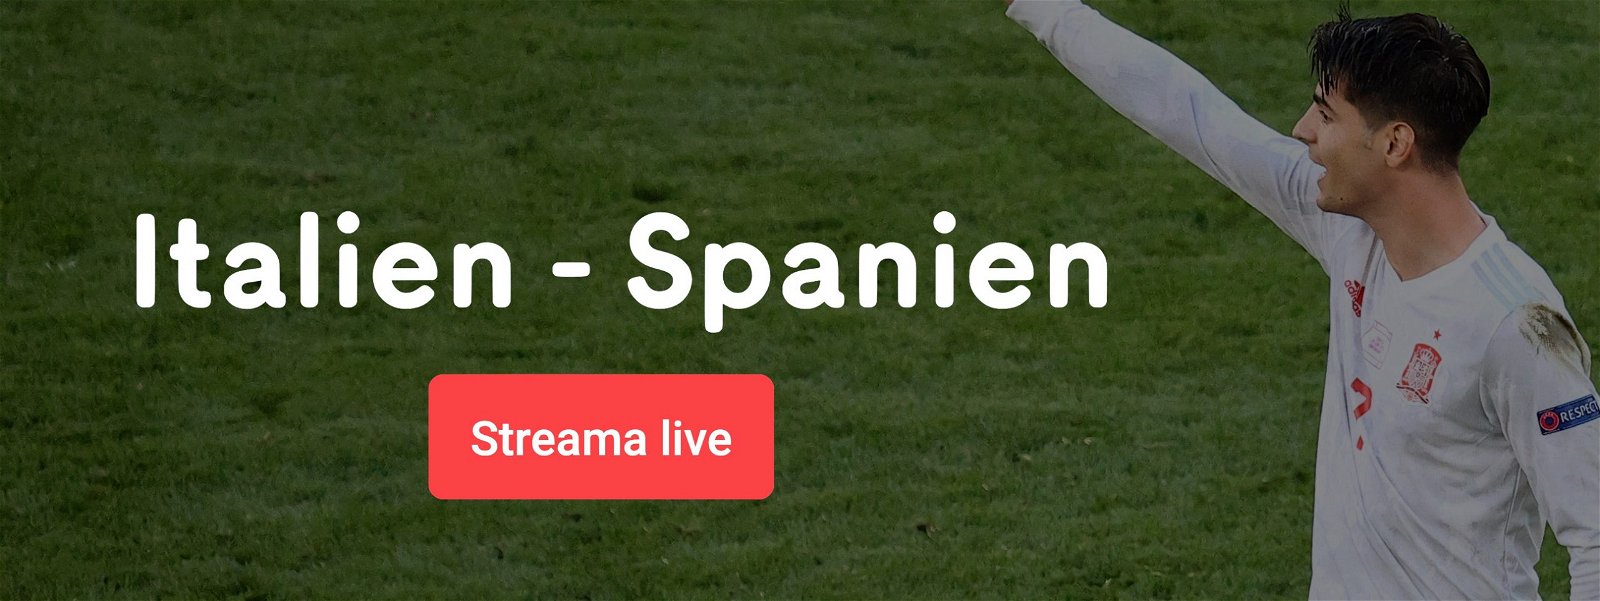 Italien Spanien TV kanal: vilken kanal visar Italien Spanien i EM på TV?